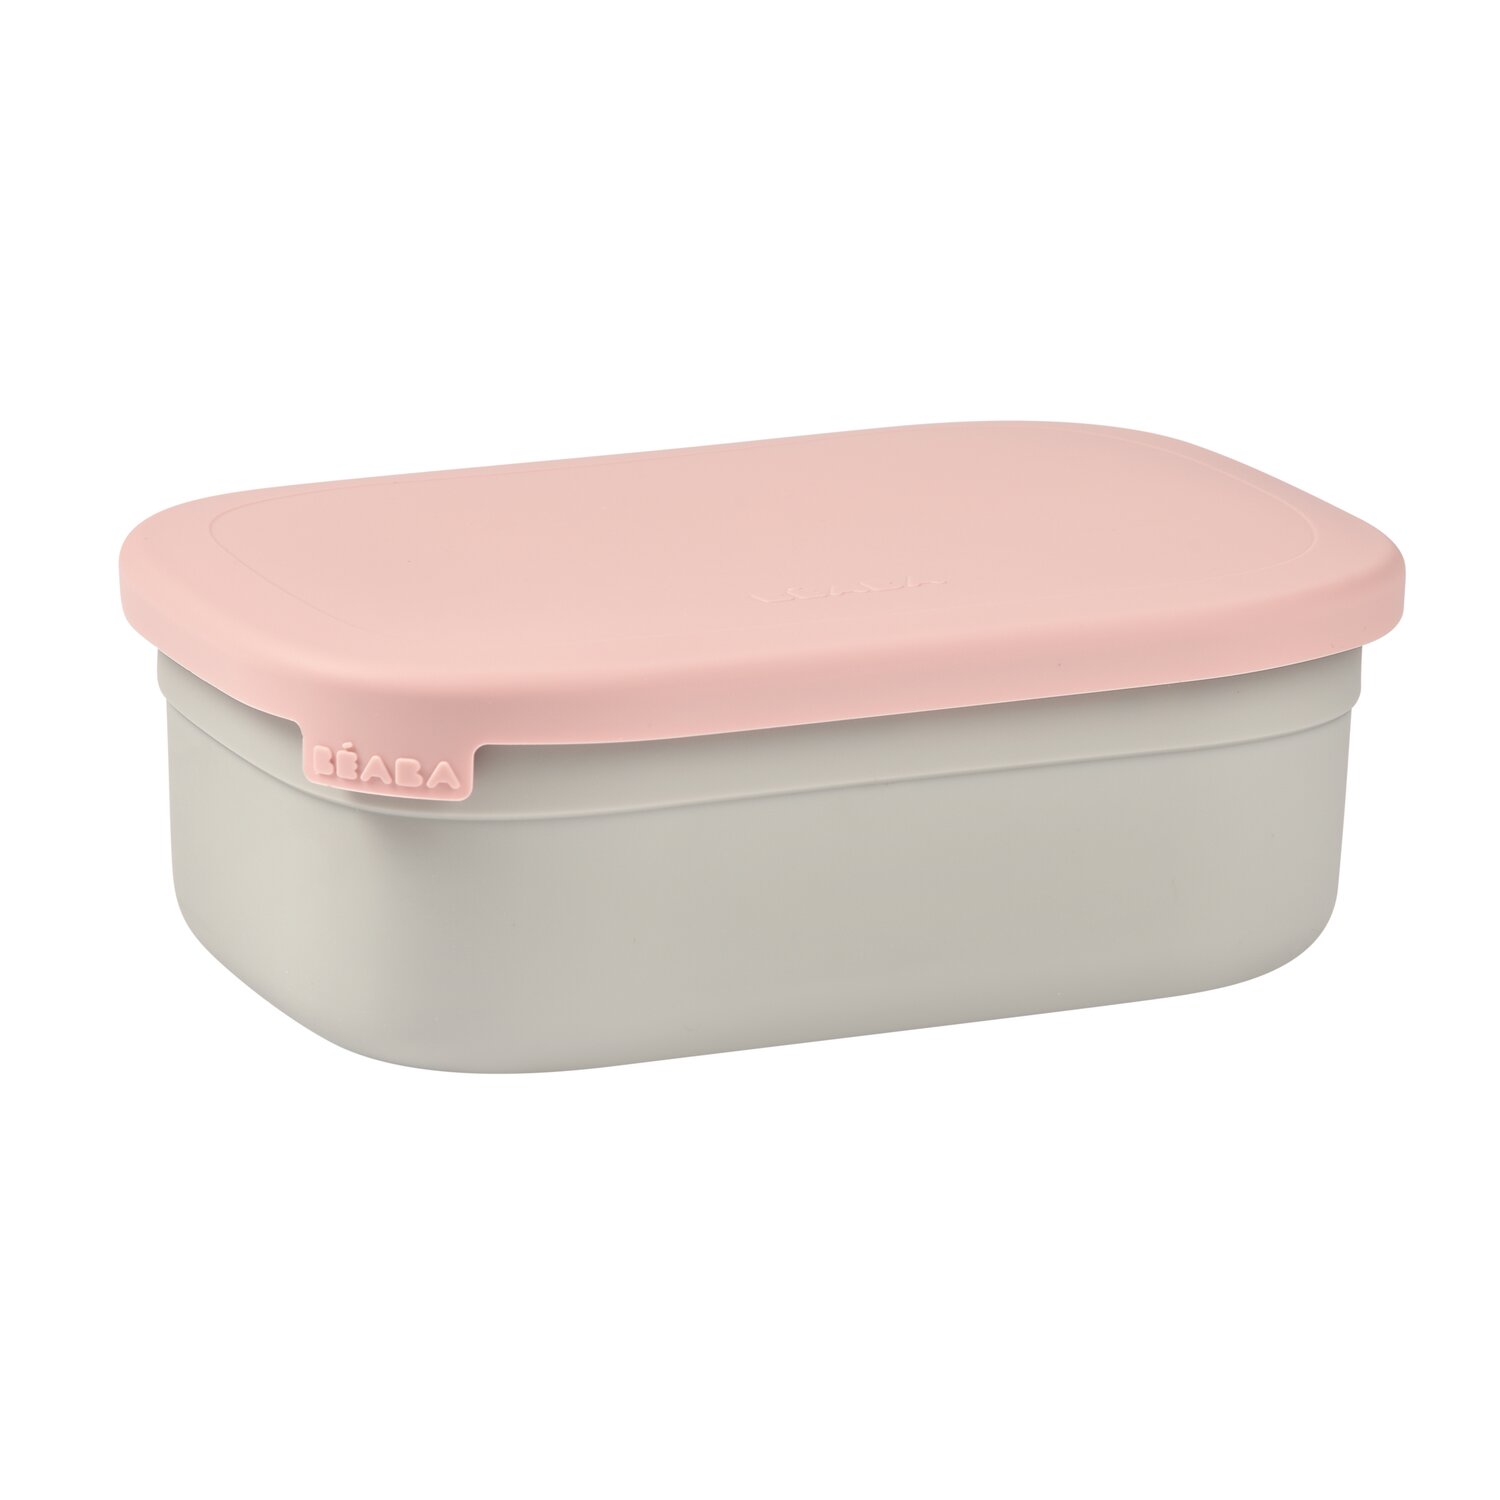 Lunch box powder pink Béaba